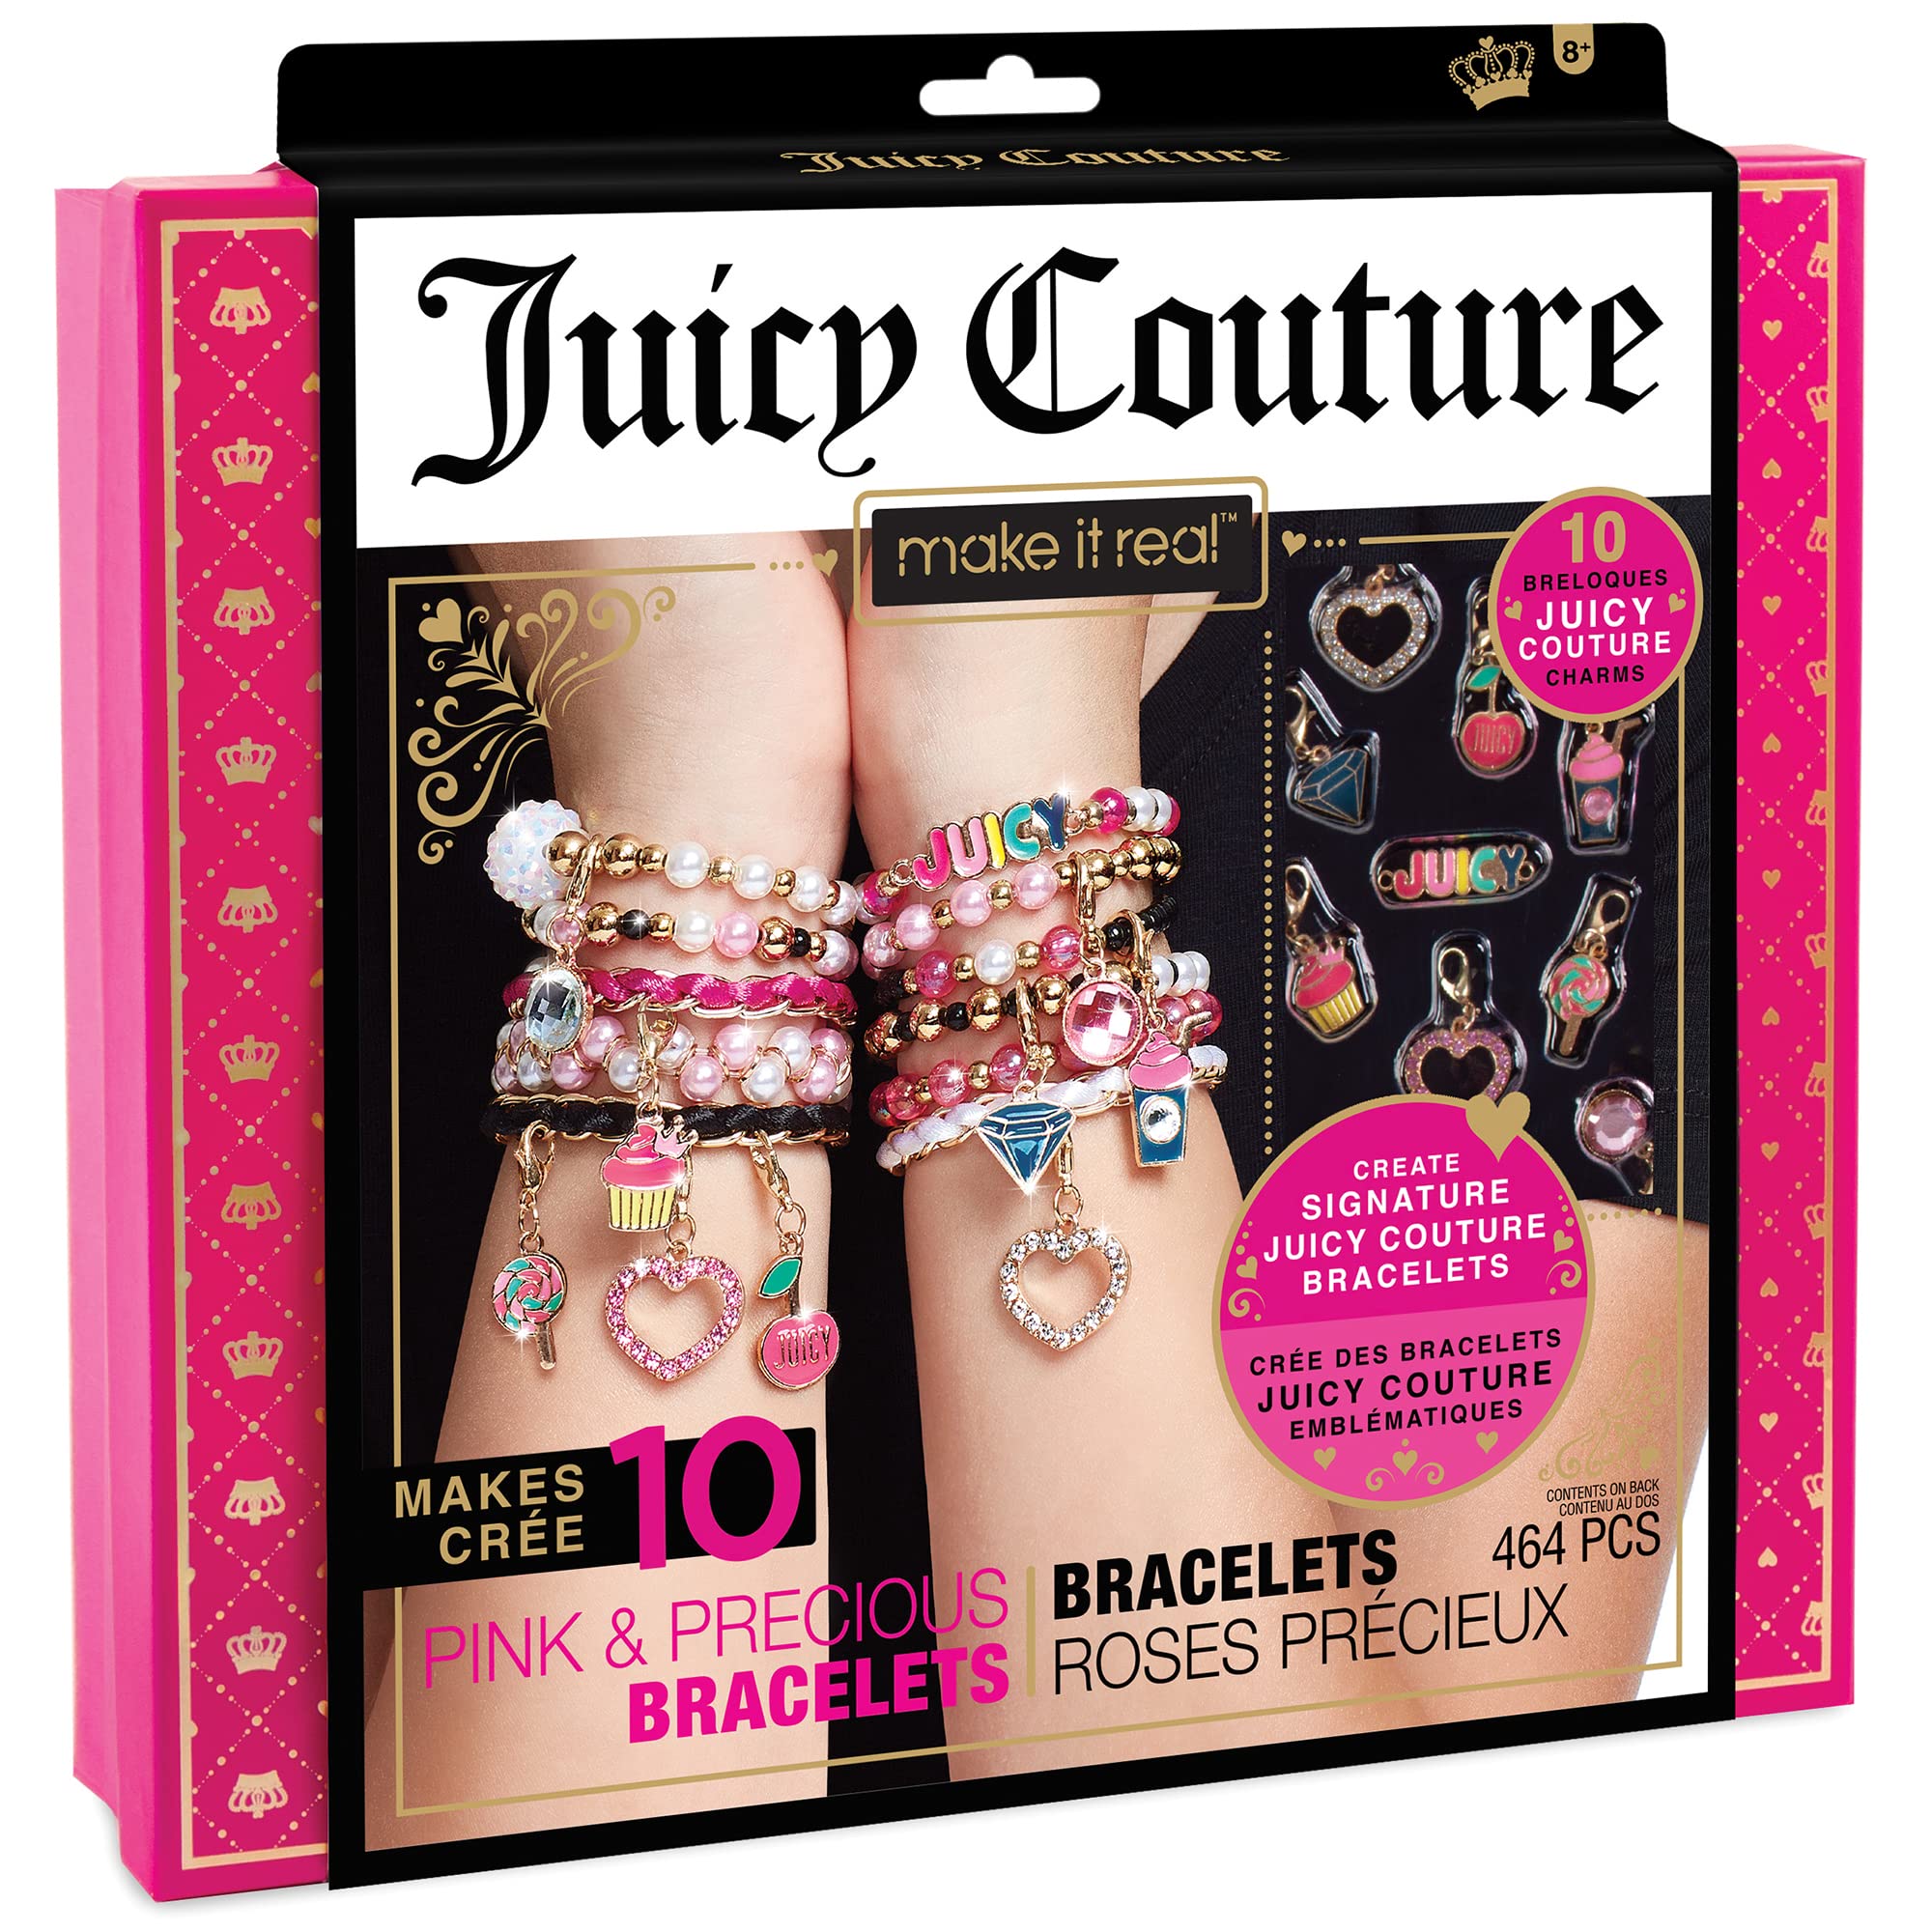 Achat Make It Real 4408 Bracelet Making Kit-Juicy Couture Pink and Precious,0.41 kilograms uqiXb04Fh grand